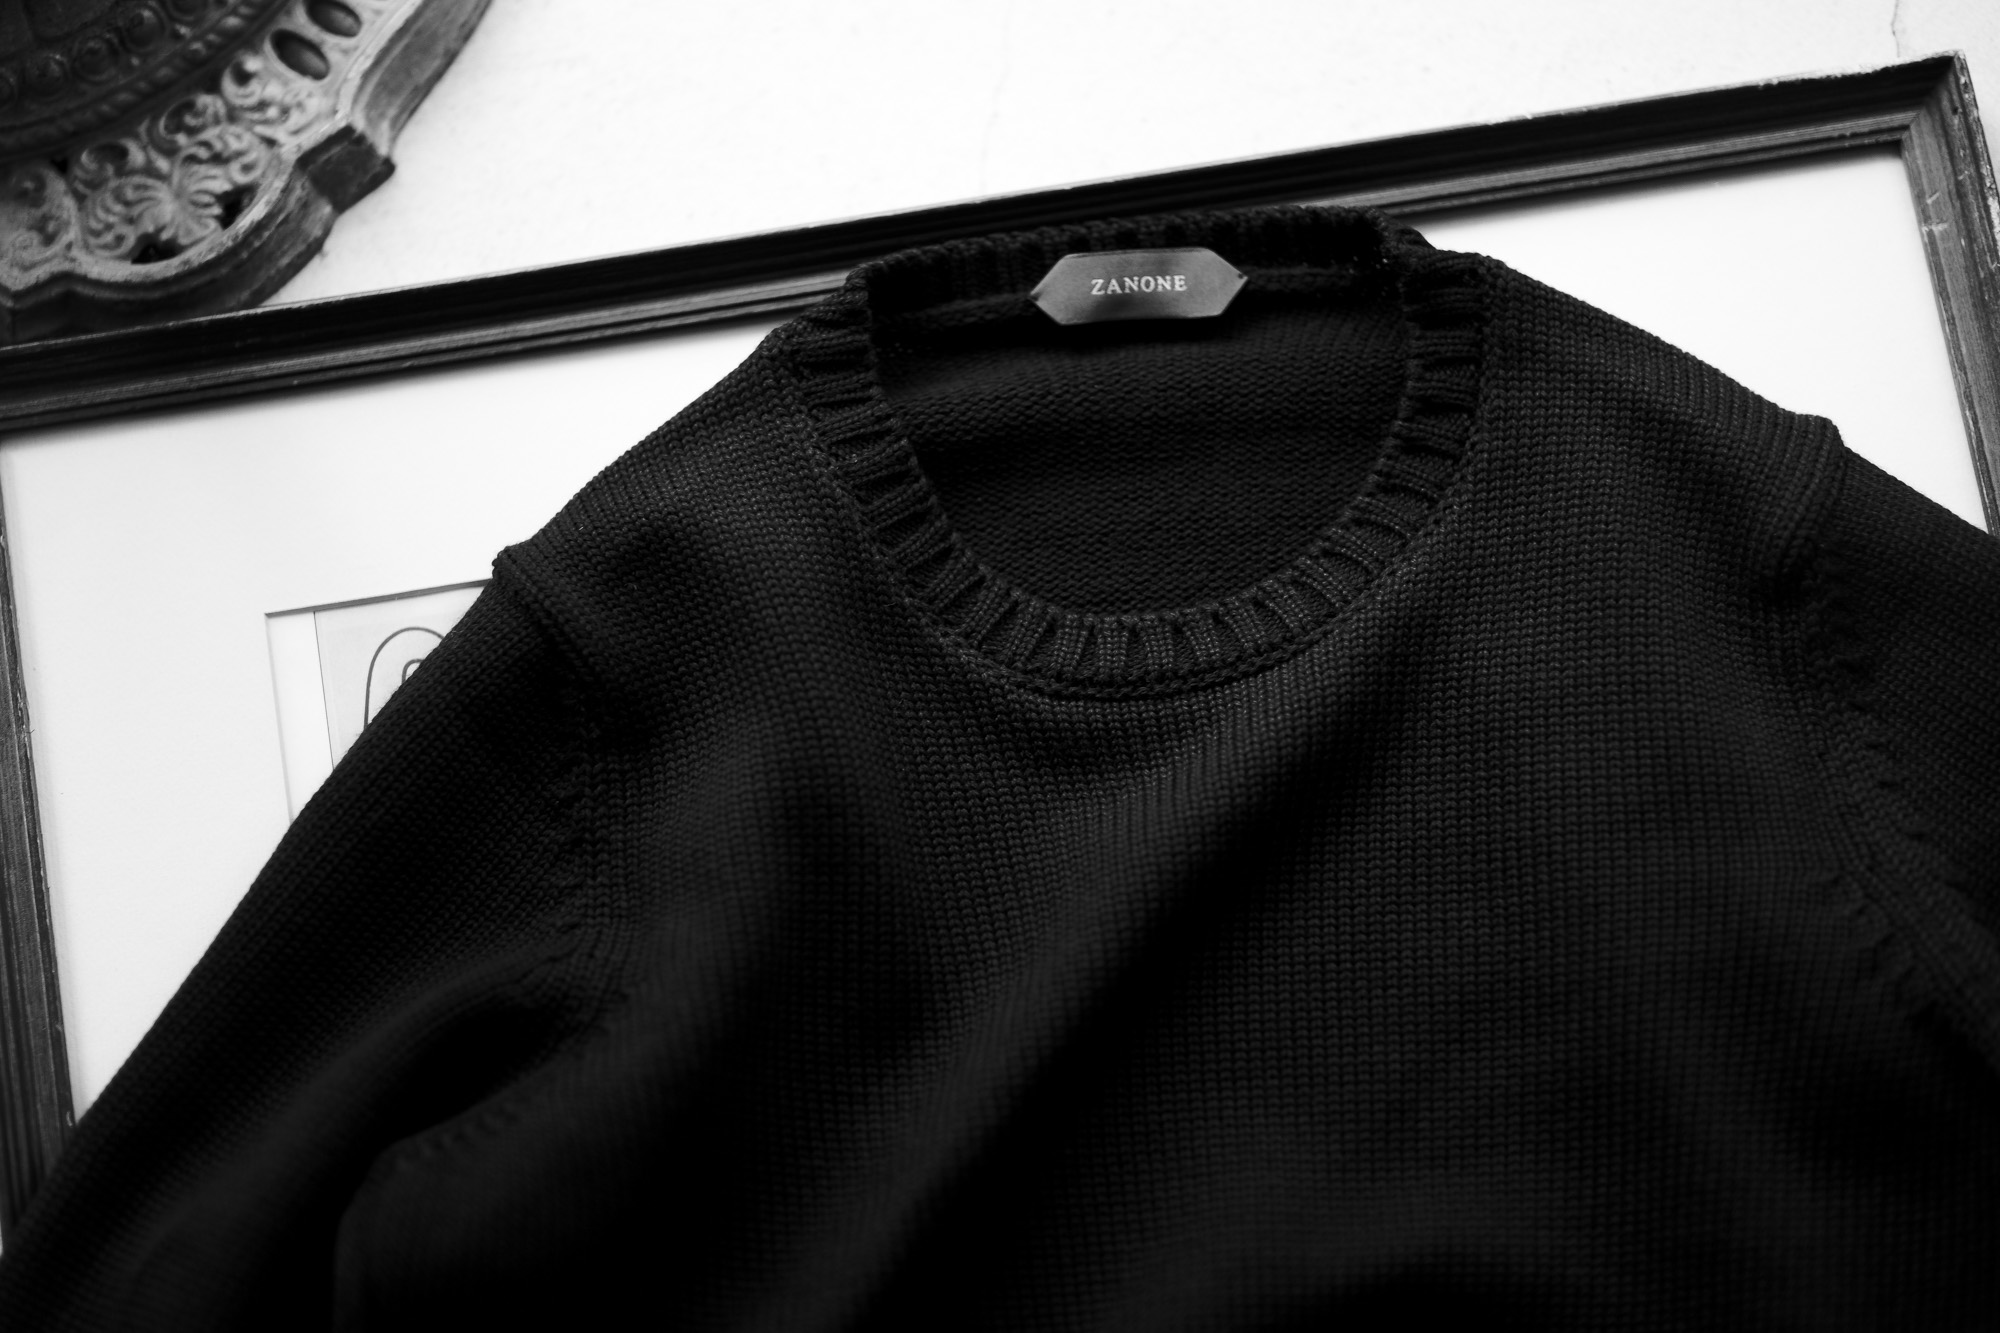 ZANONE(ザノーネ) Crew Neck Sweater (クルーネック セーター) VIRGIN 